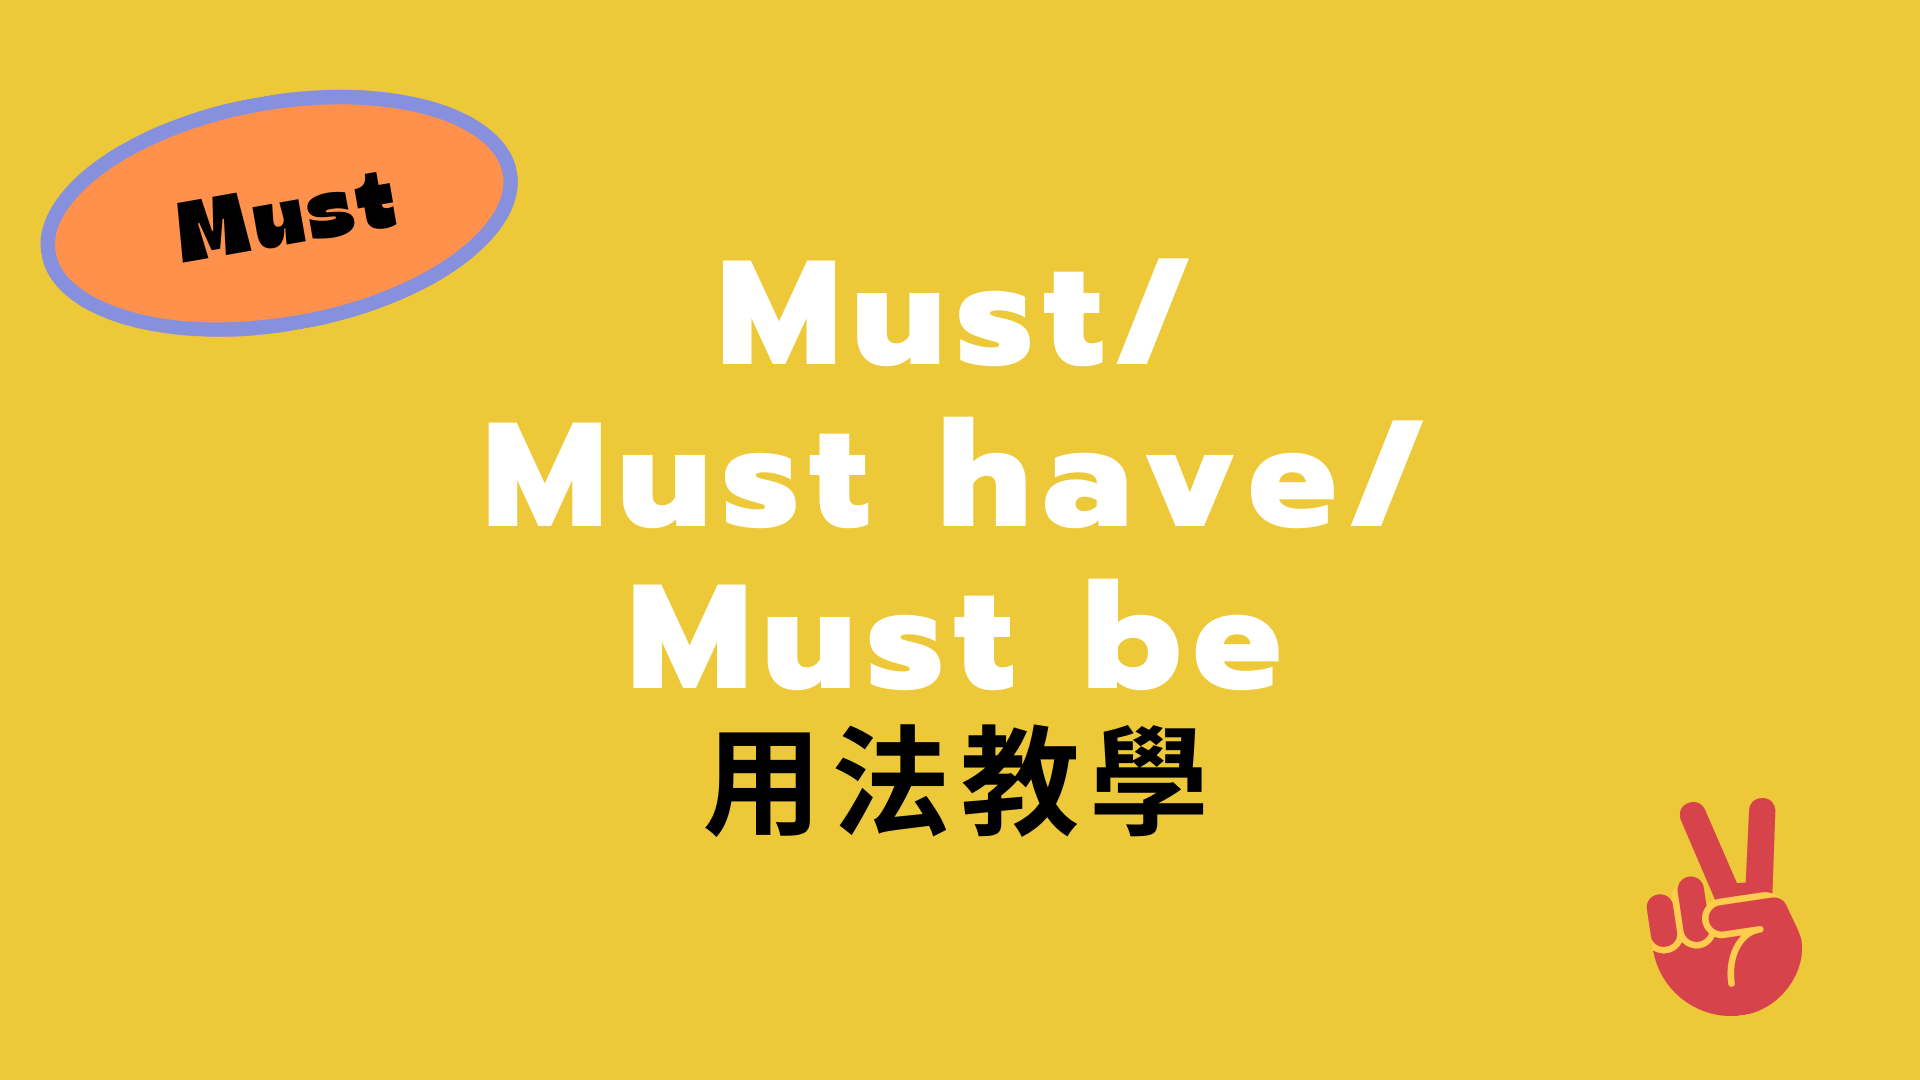 英文 must/ must have/ must be 用法與中文意思差異